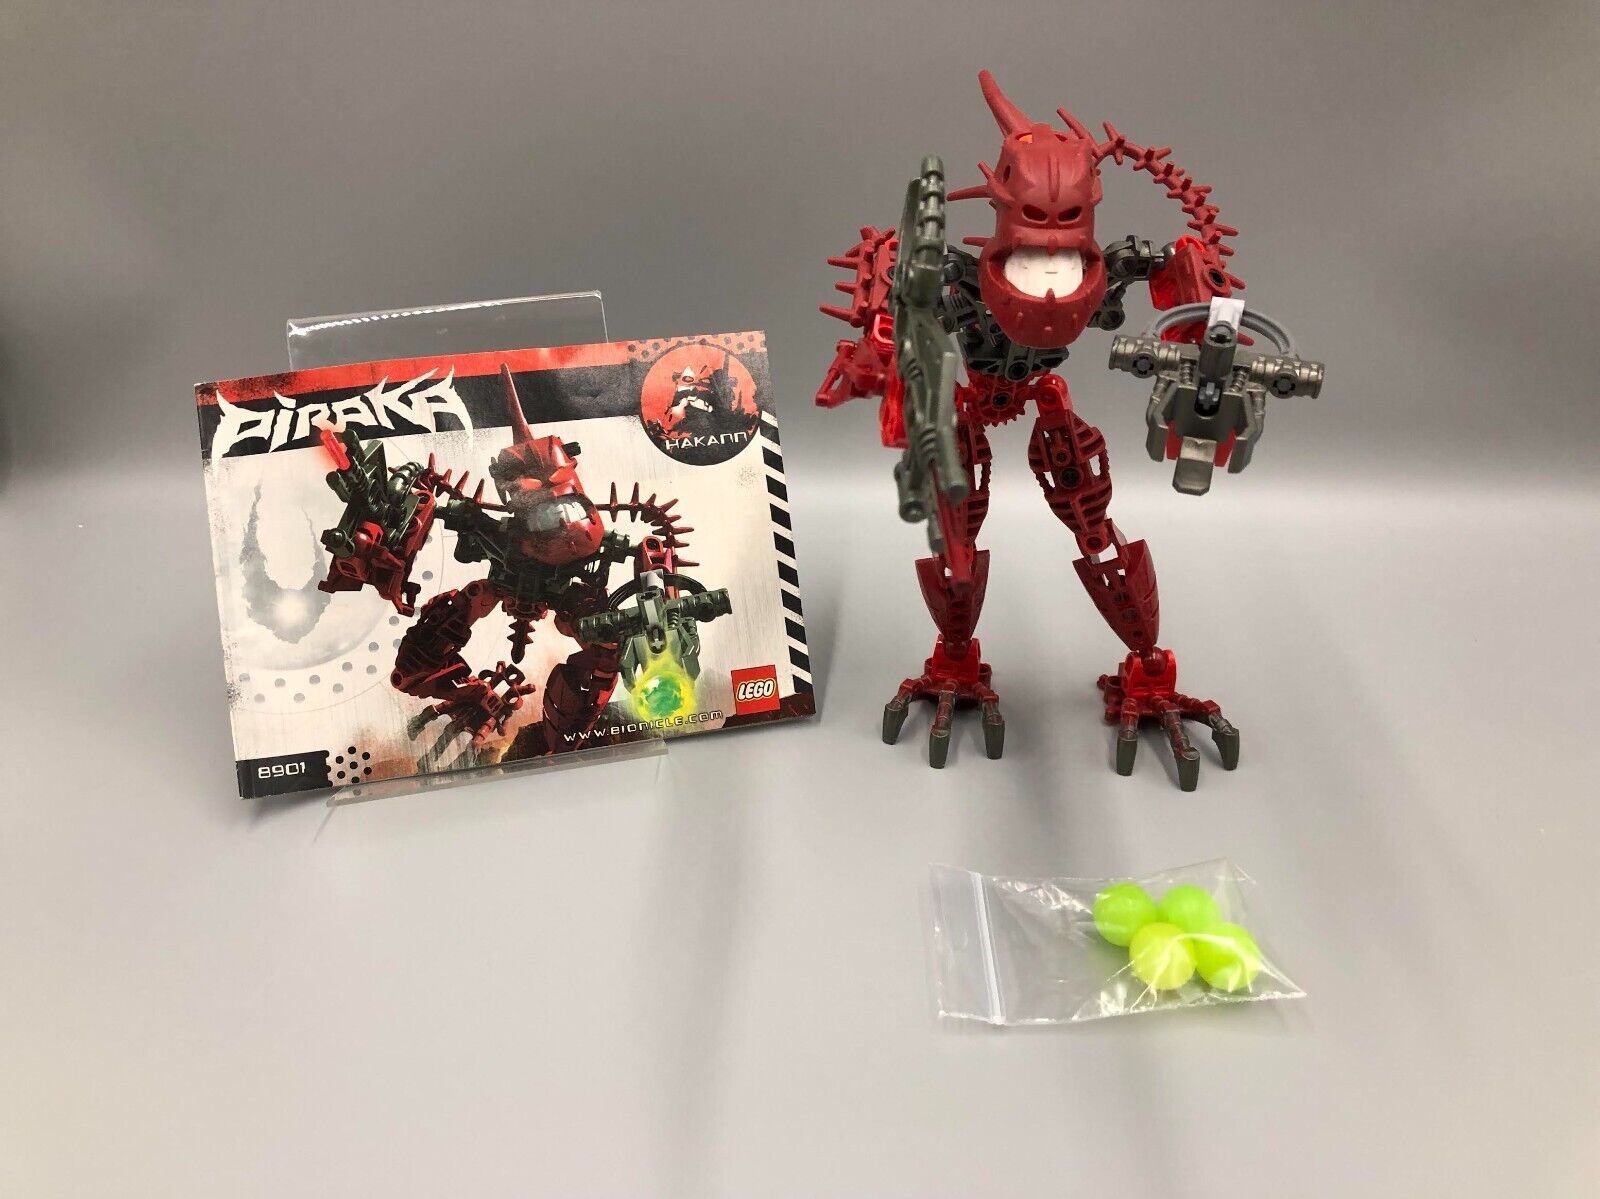 Lego Bionicle: Piraka: Hakann, 8901, 100% Complete w/Manual